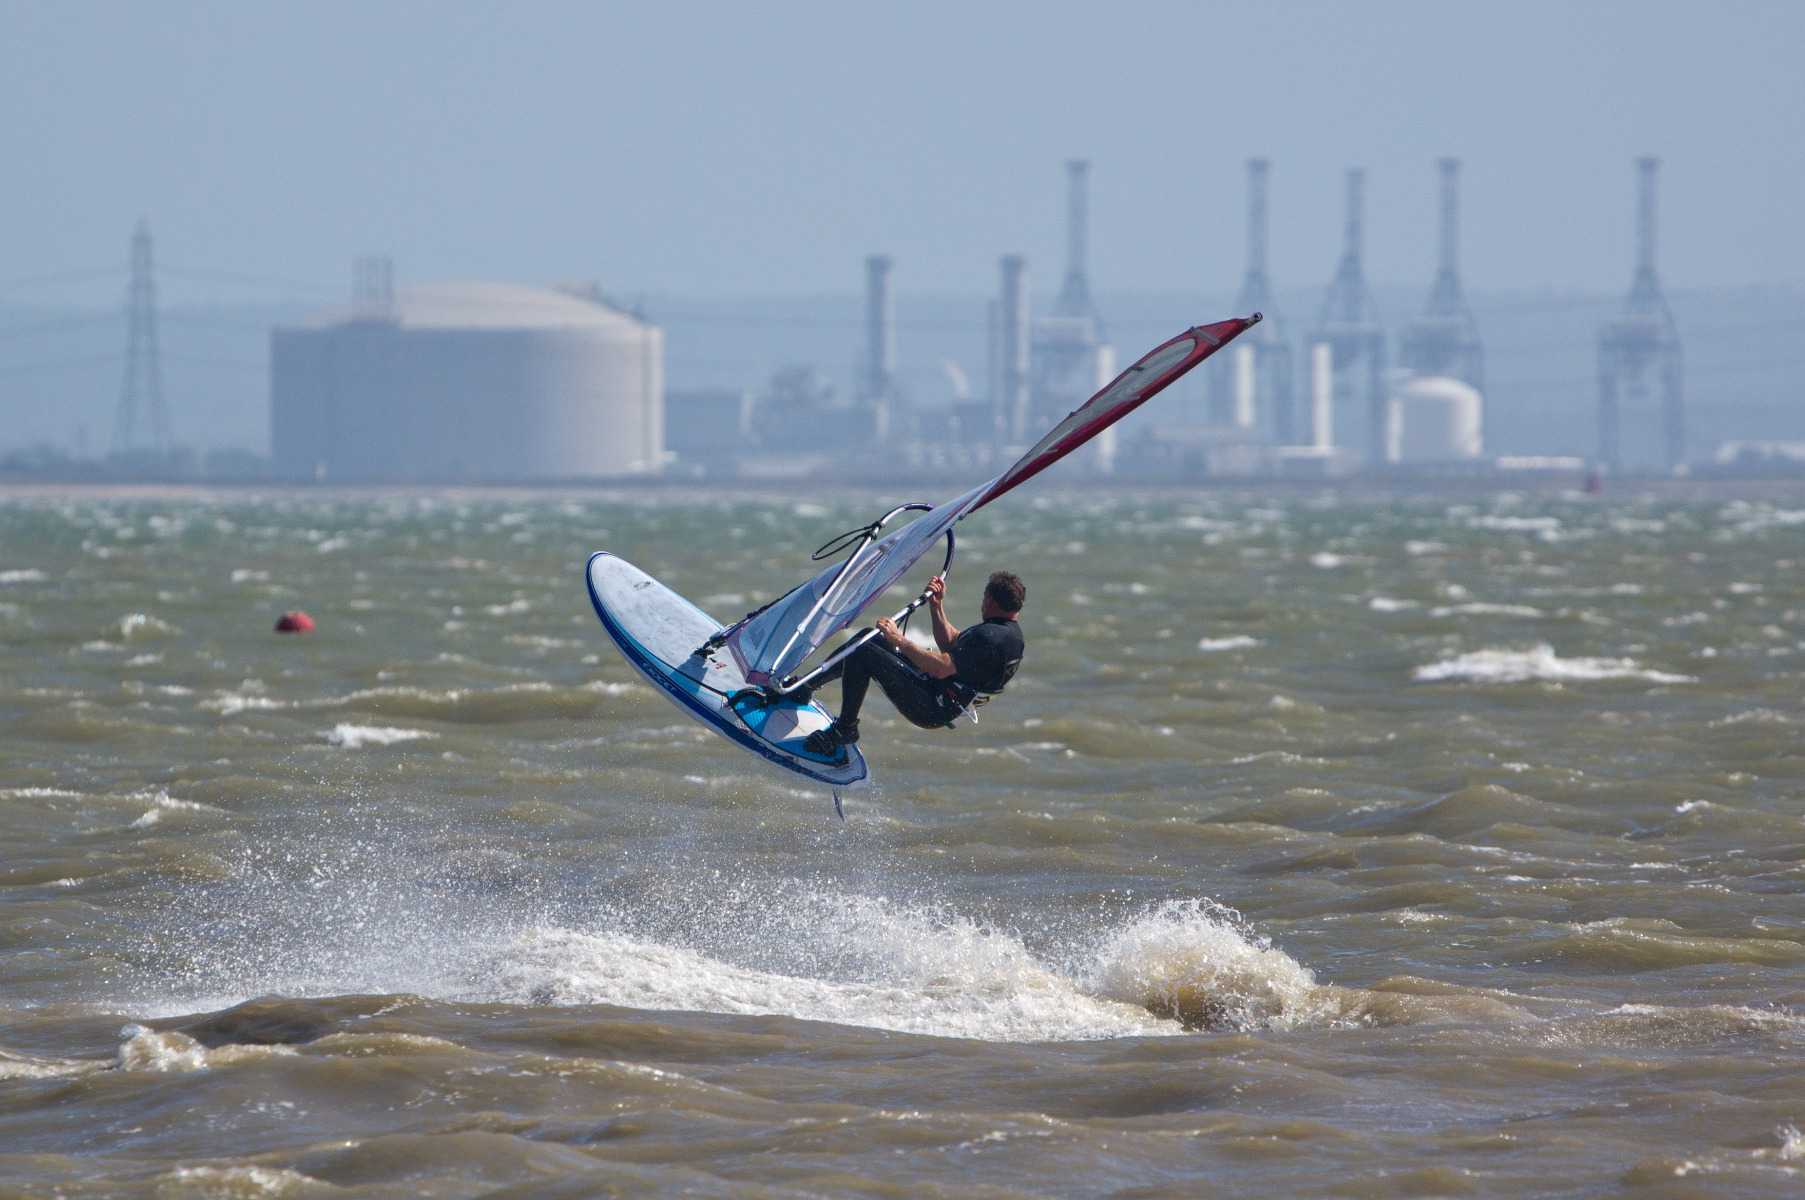 Jamie windsurfing Chalkwell high tide